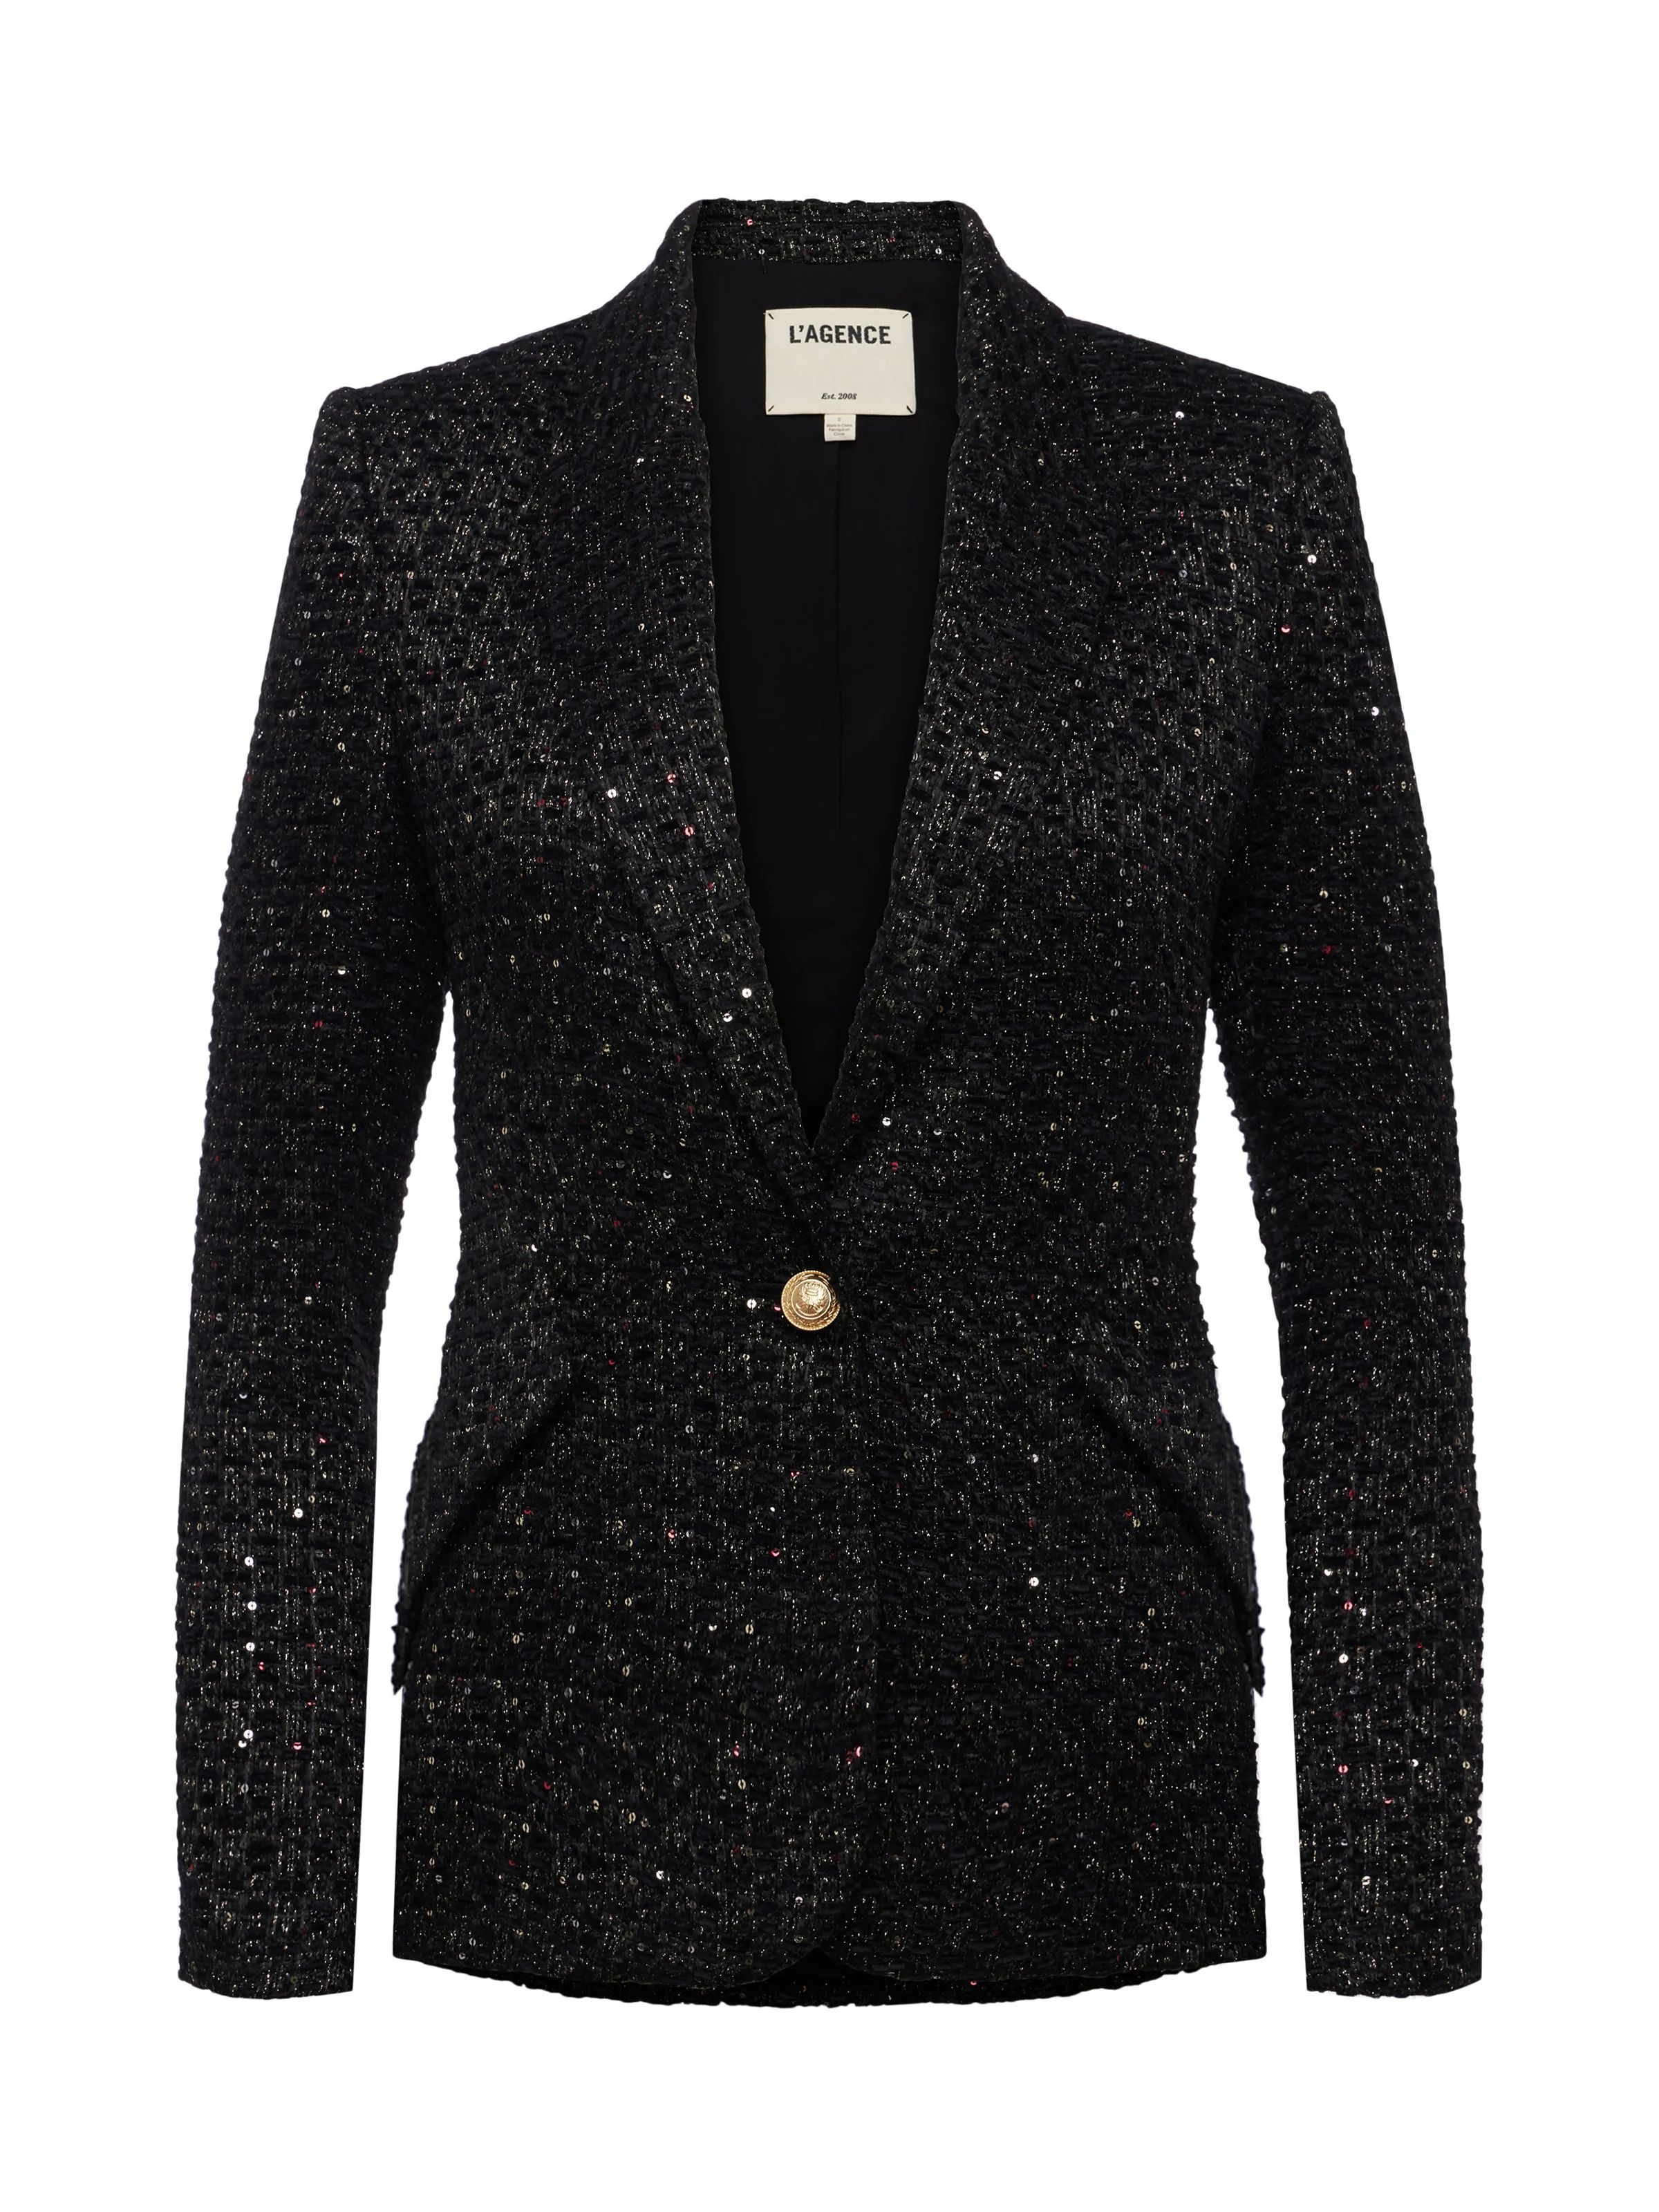 L'AGENCE Chamberlain Tweed Blazer In Black Multi | L'Agence